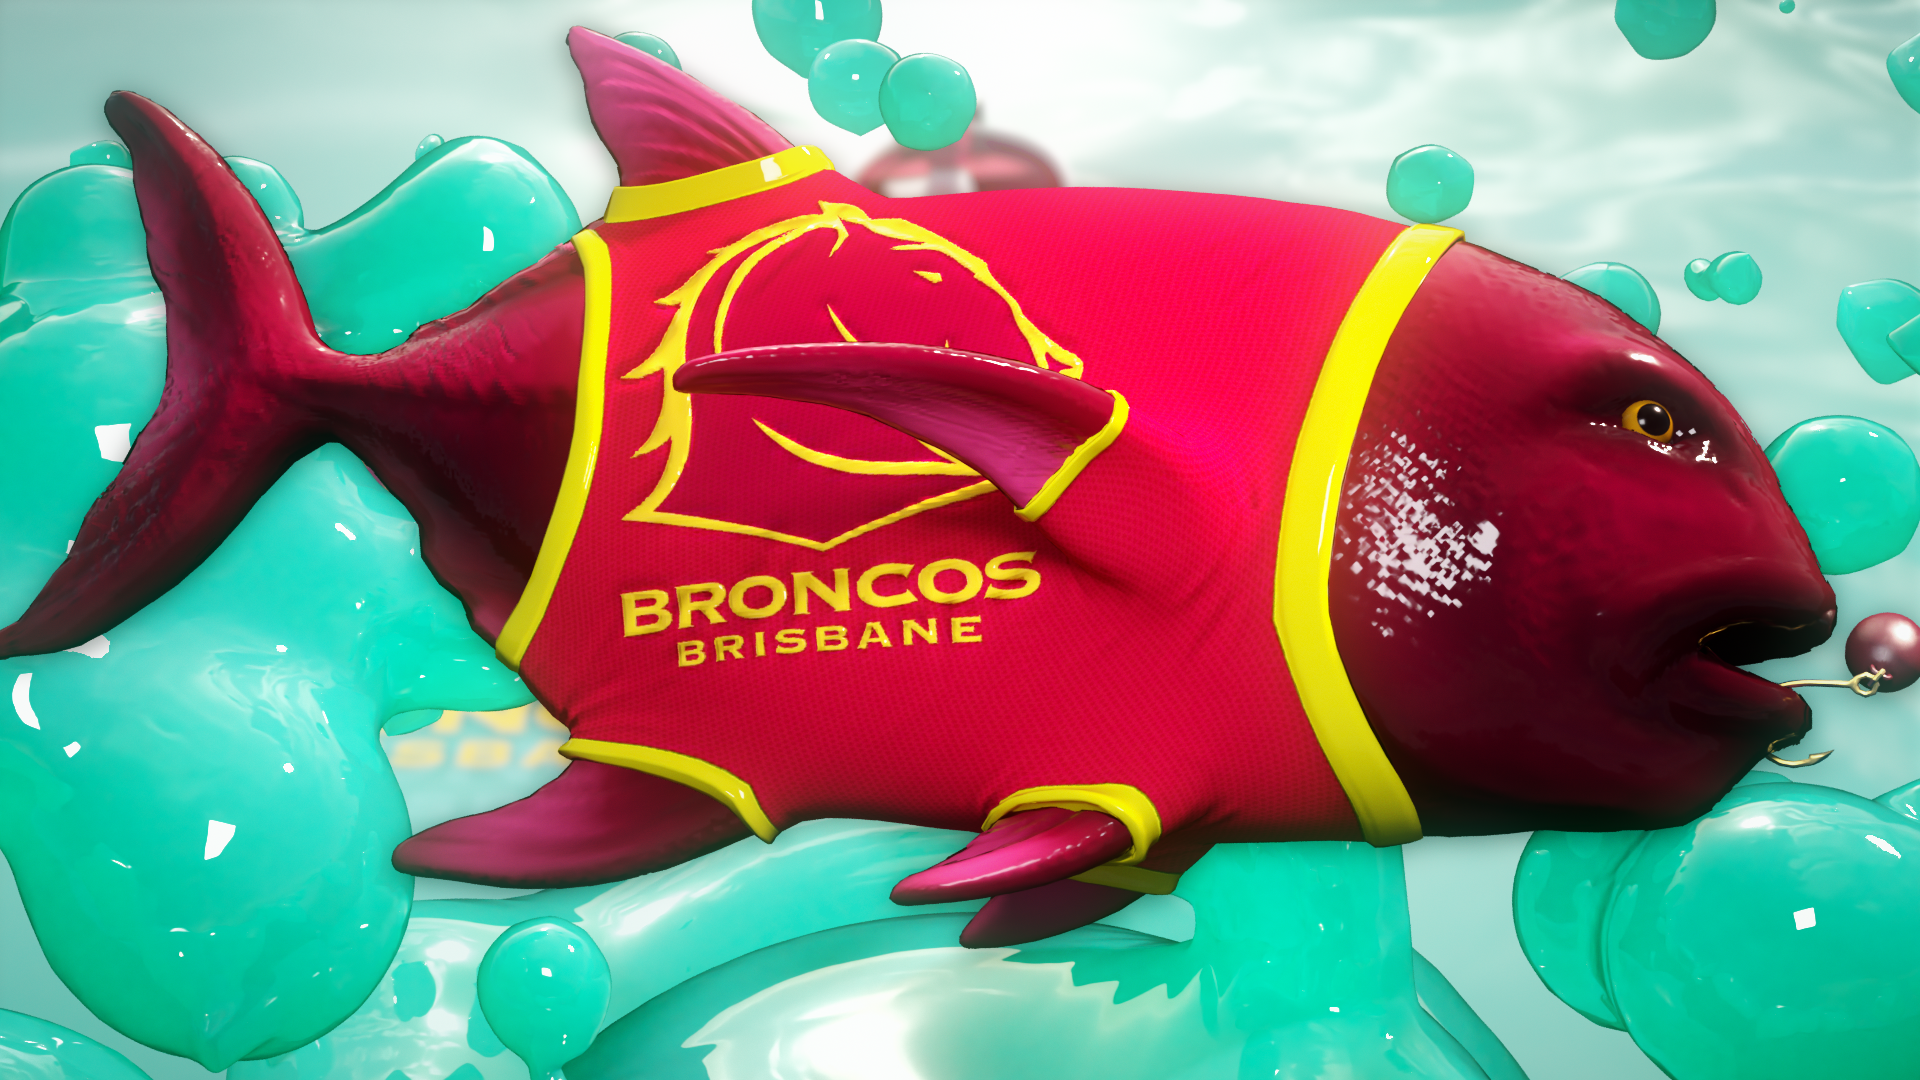 3D modelled fish wearing a Brisbane Broncos jersey